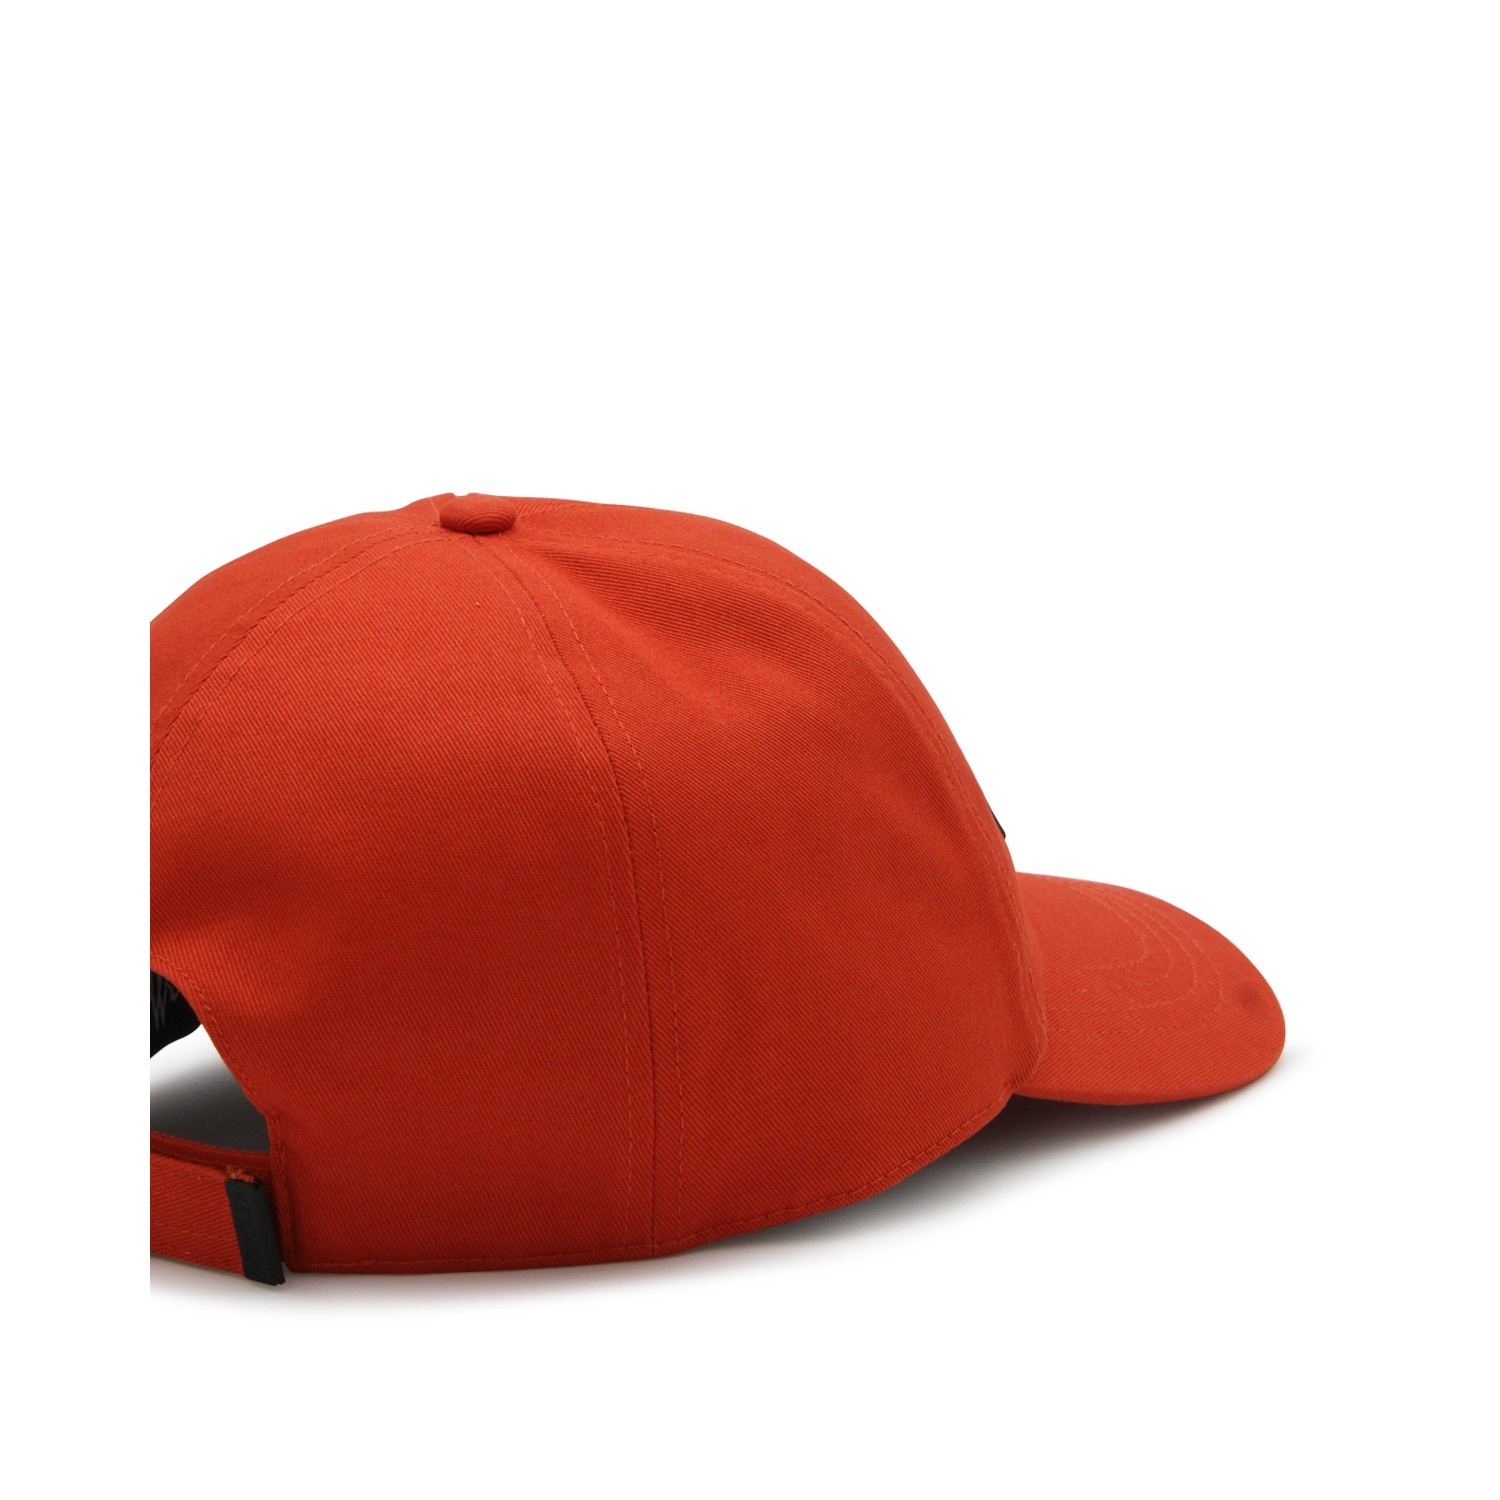 RED COTTON BASEBALL CAP - 2